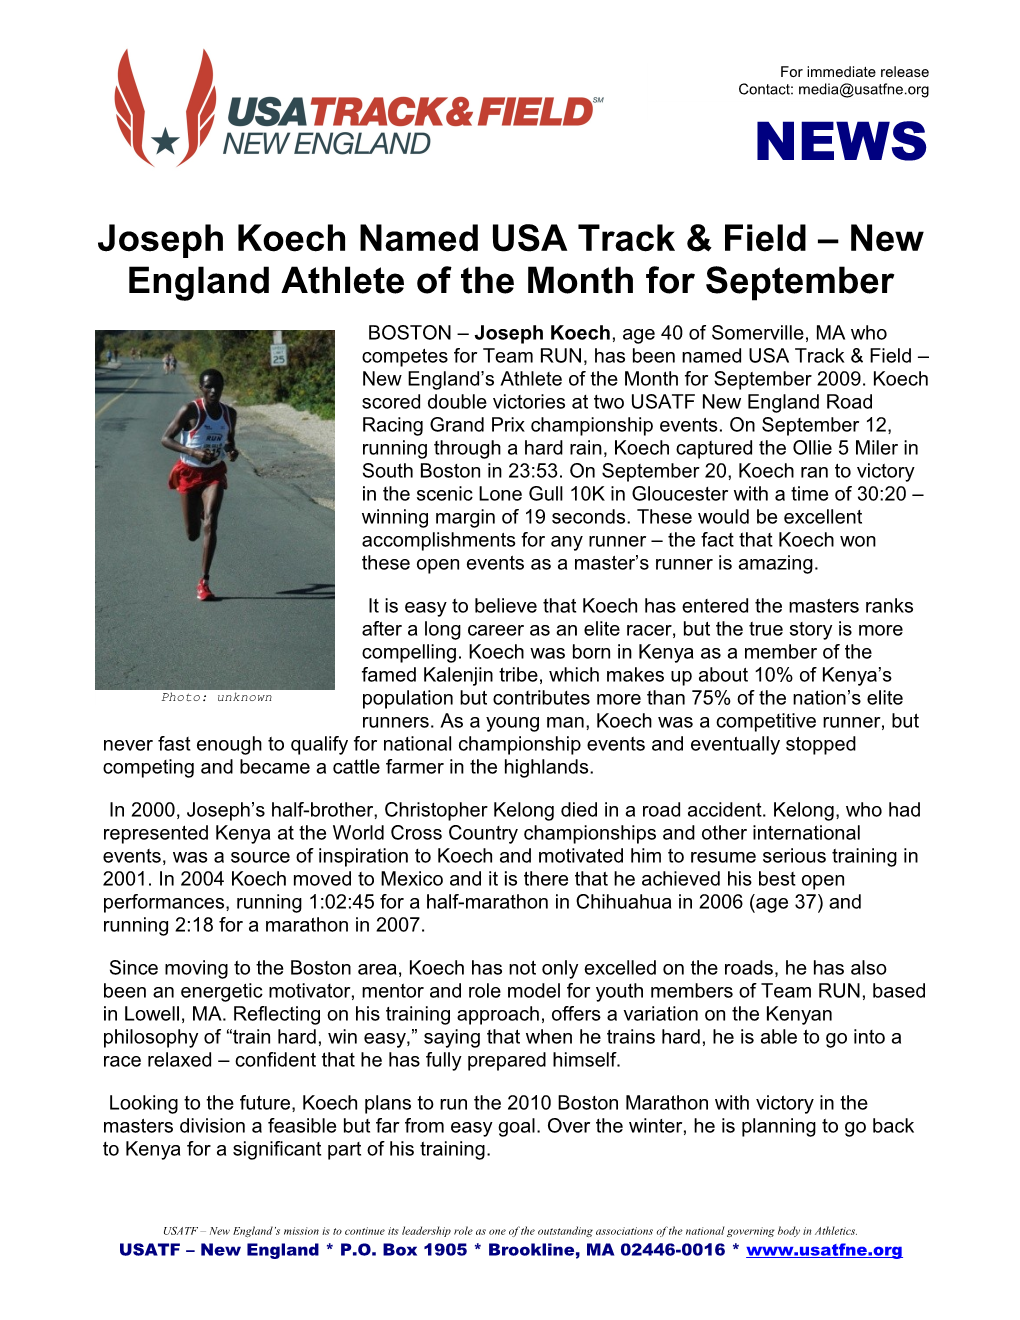 Joseph Koech Named USA Track & Field – New England Athlete of The